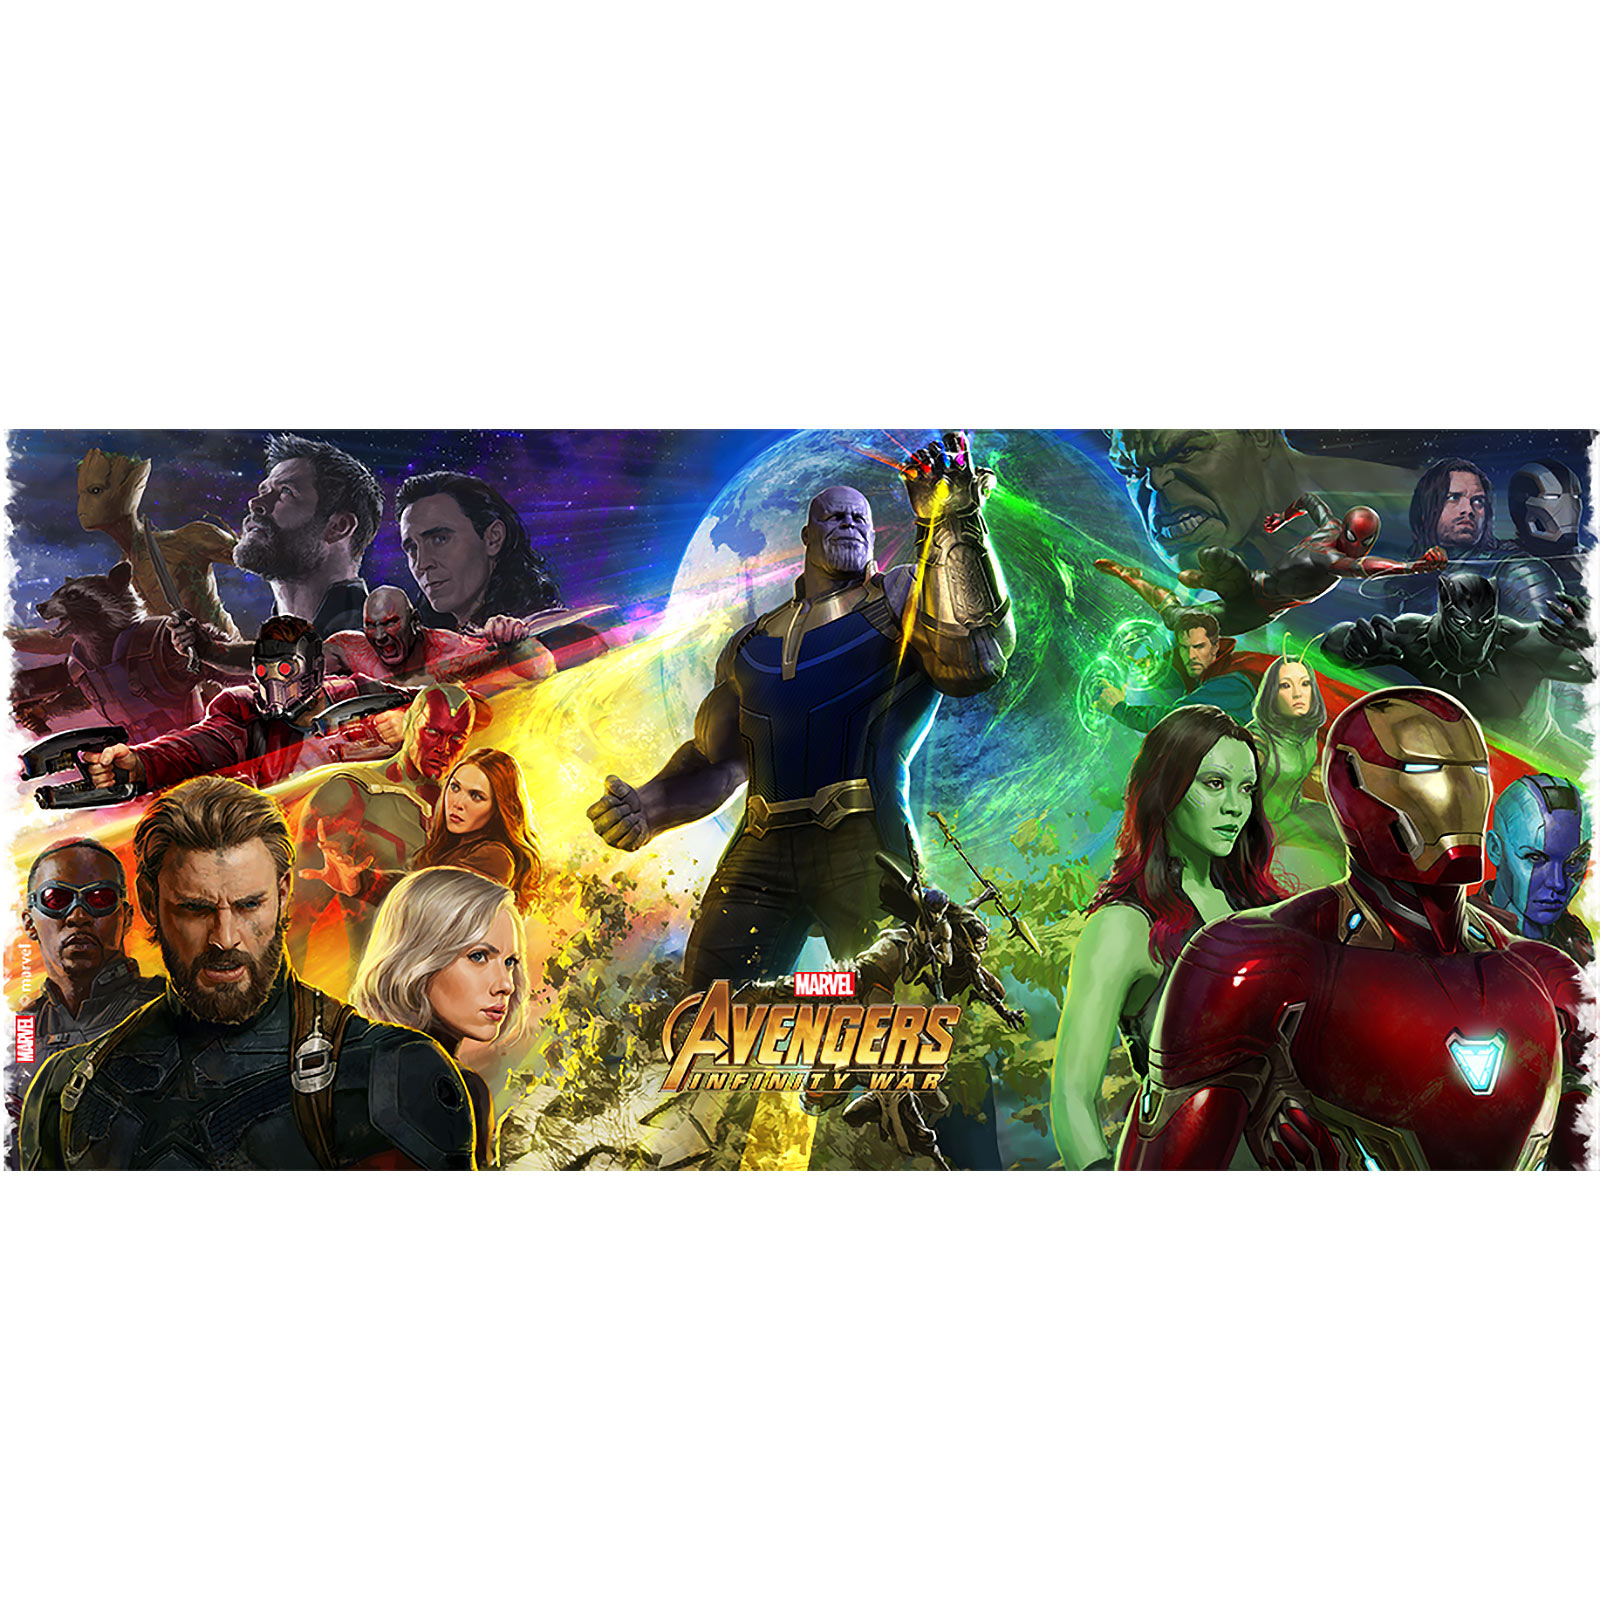 Avengers - Tasse Collage Infinity War